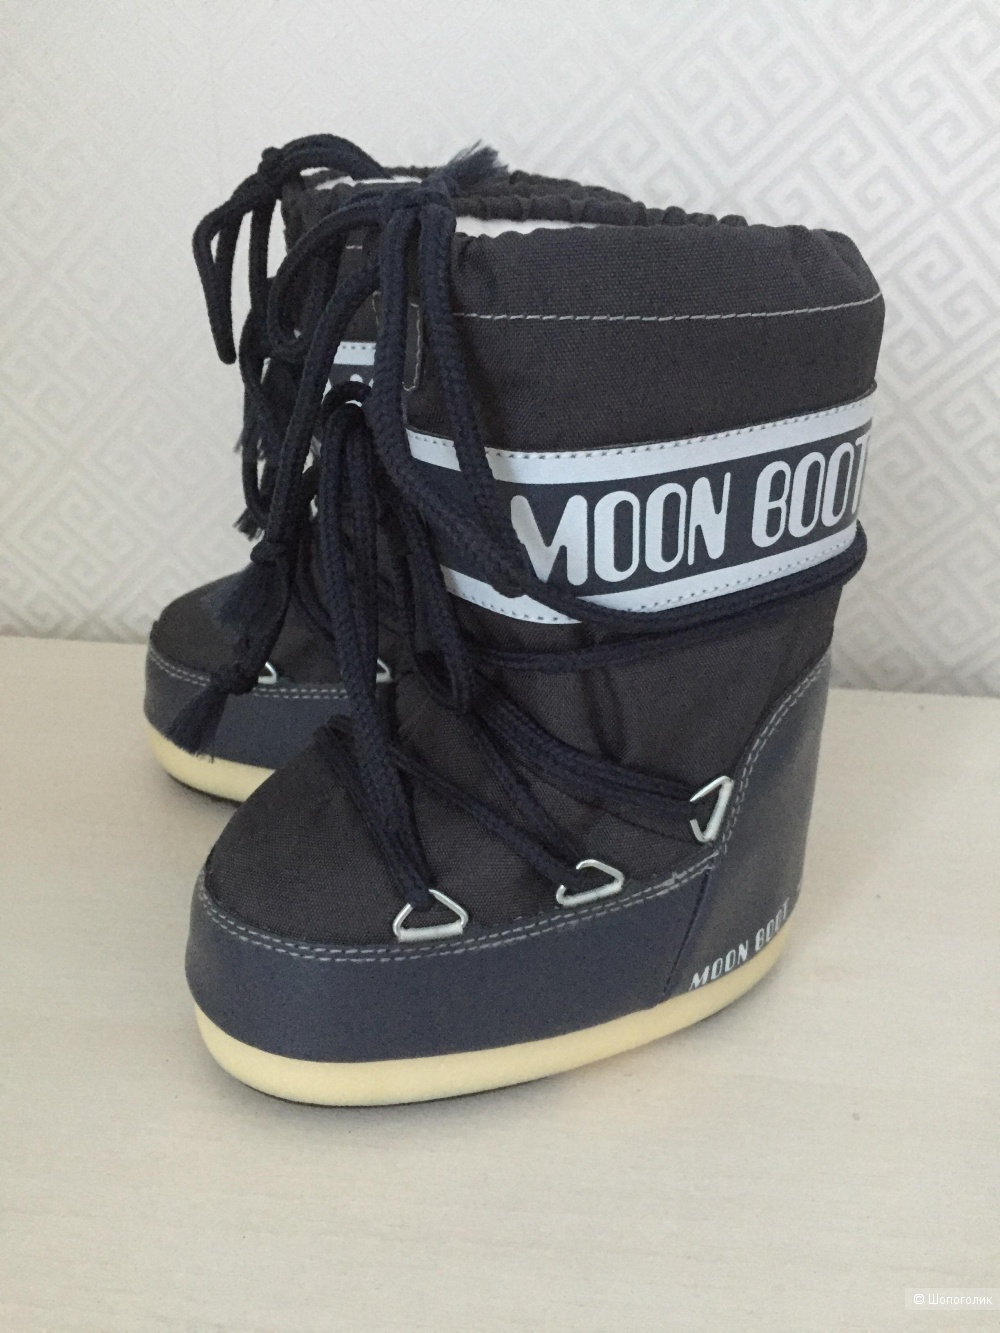 Moon Boot детские зимние сапоги